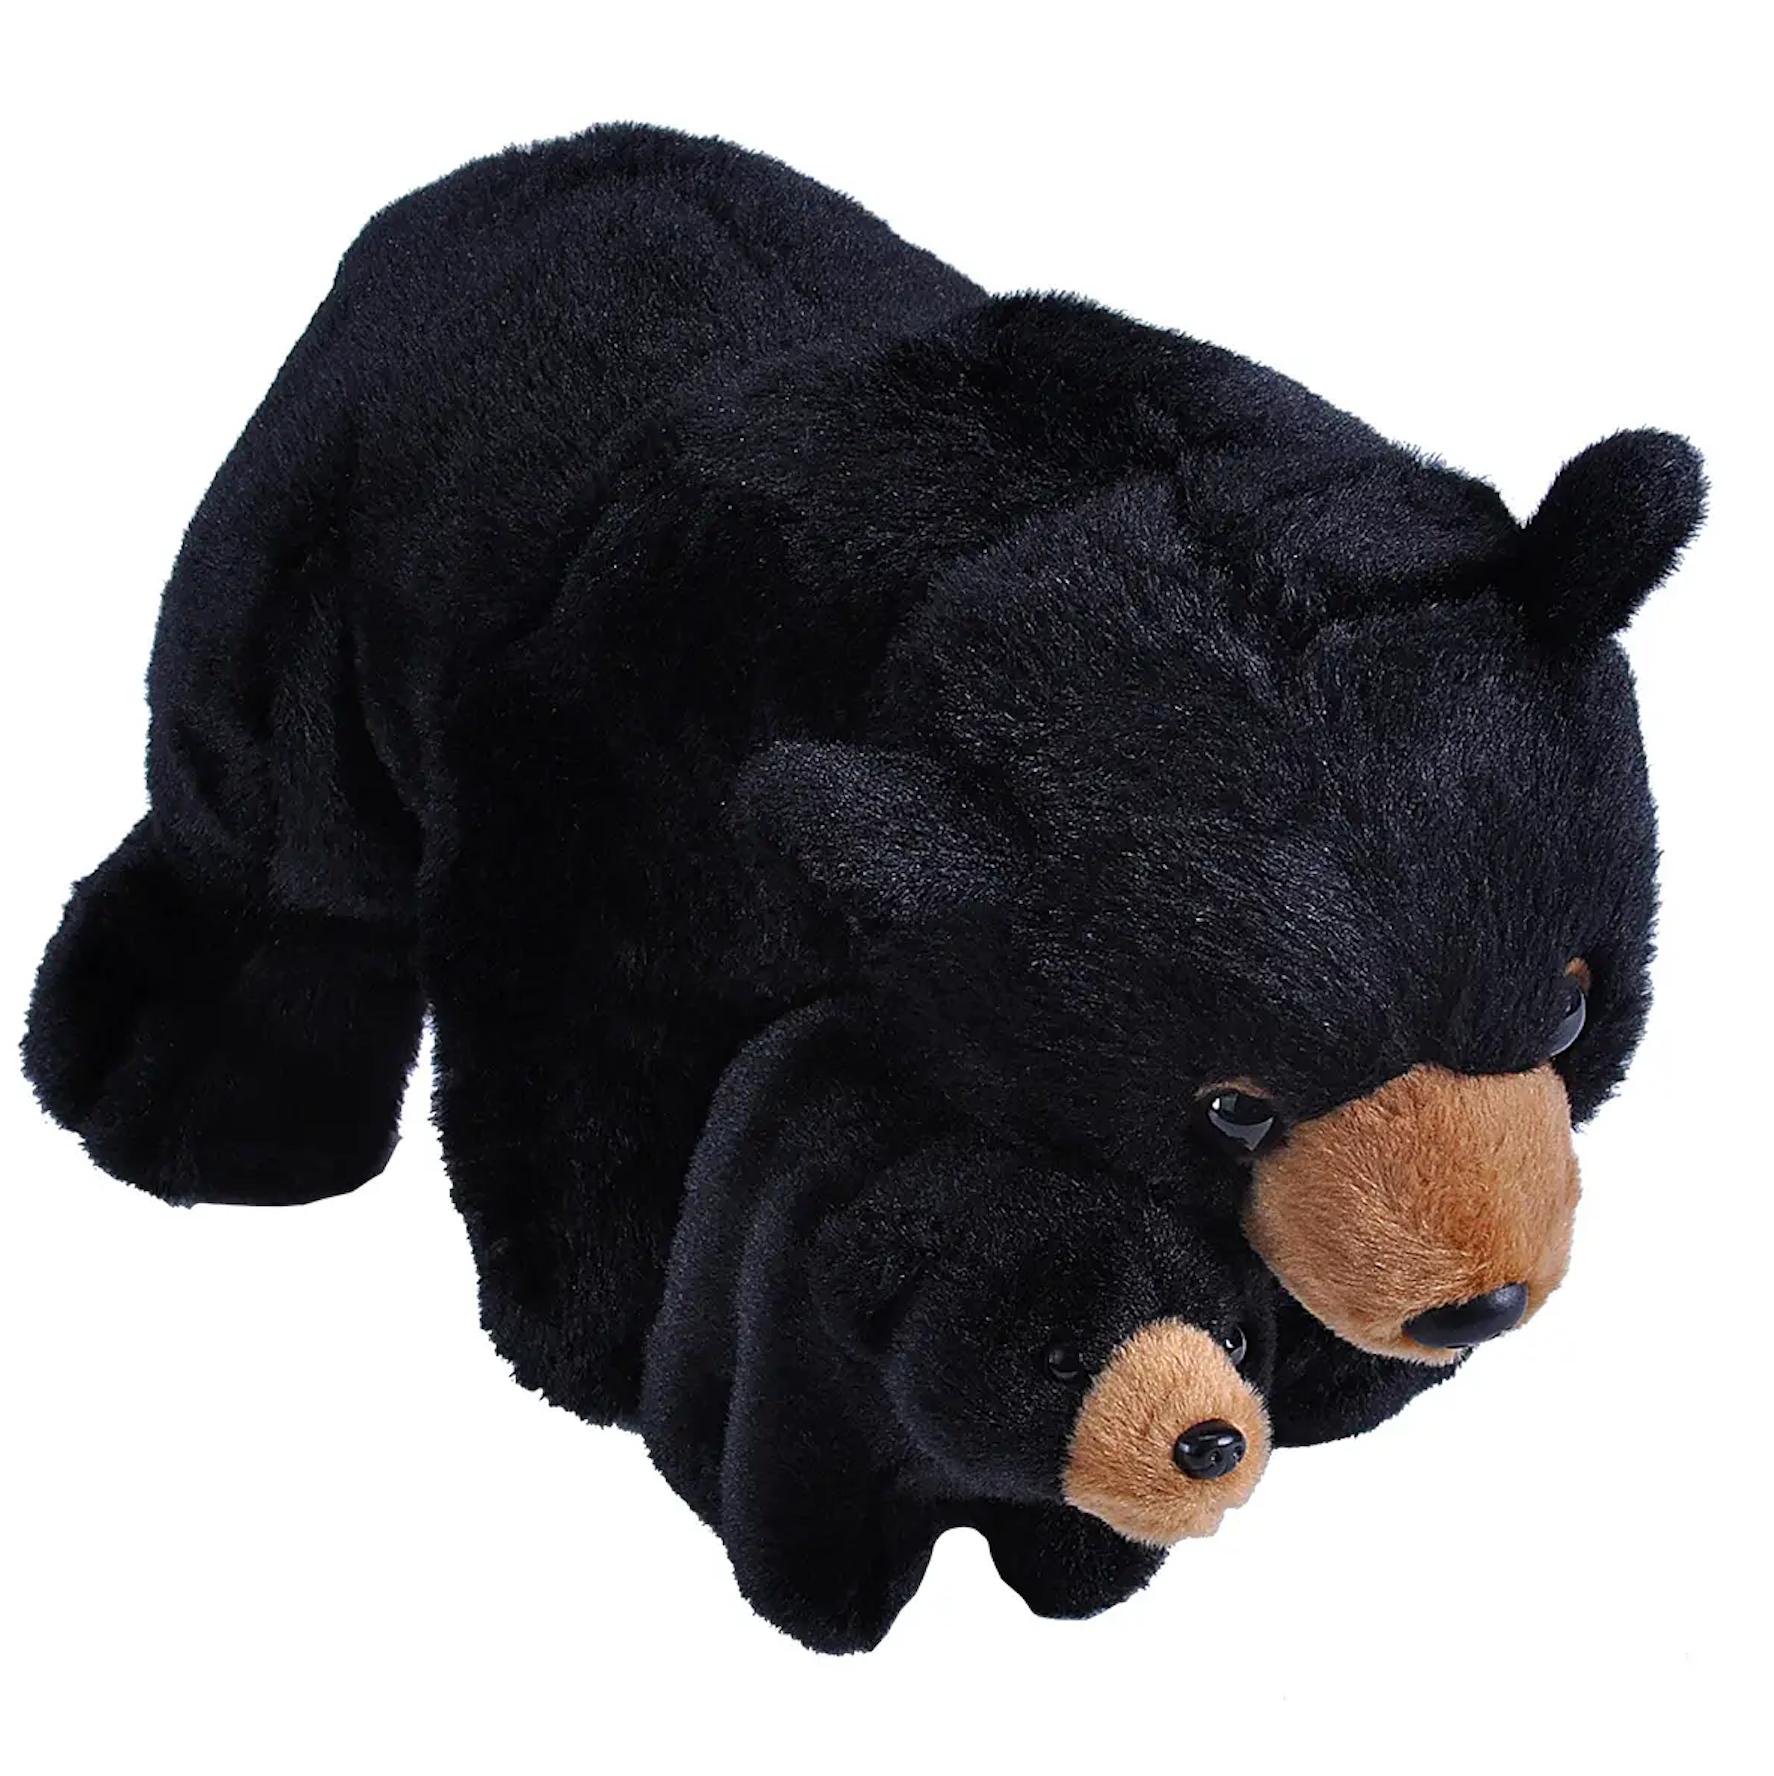 Black Bear - Mom and Baby Stuffed Animal 15"